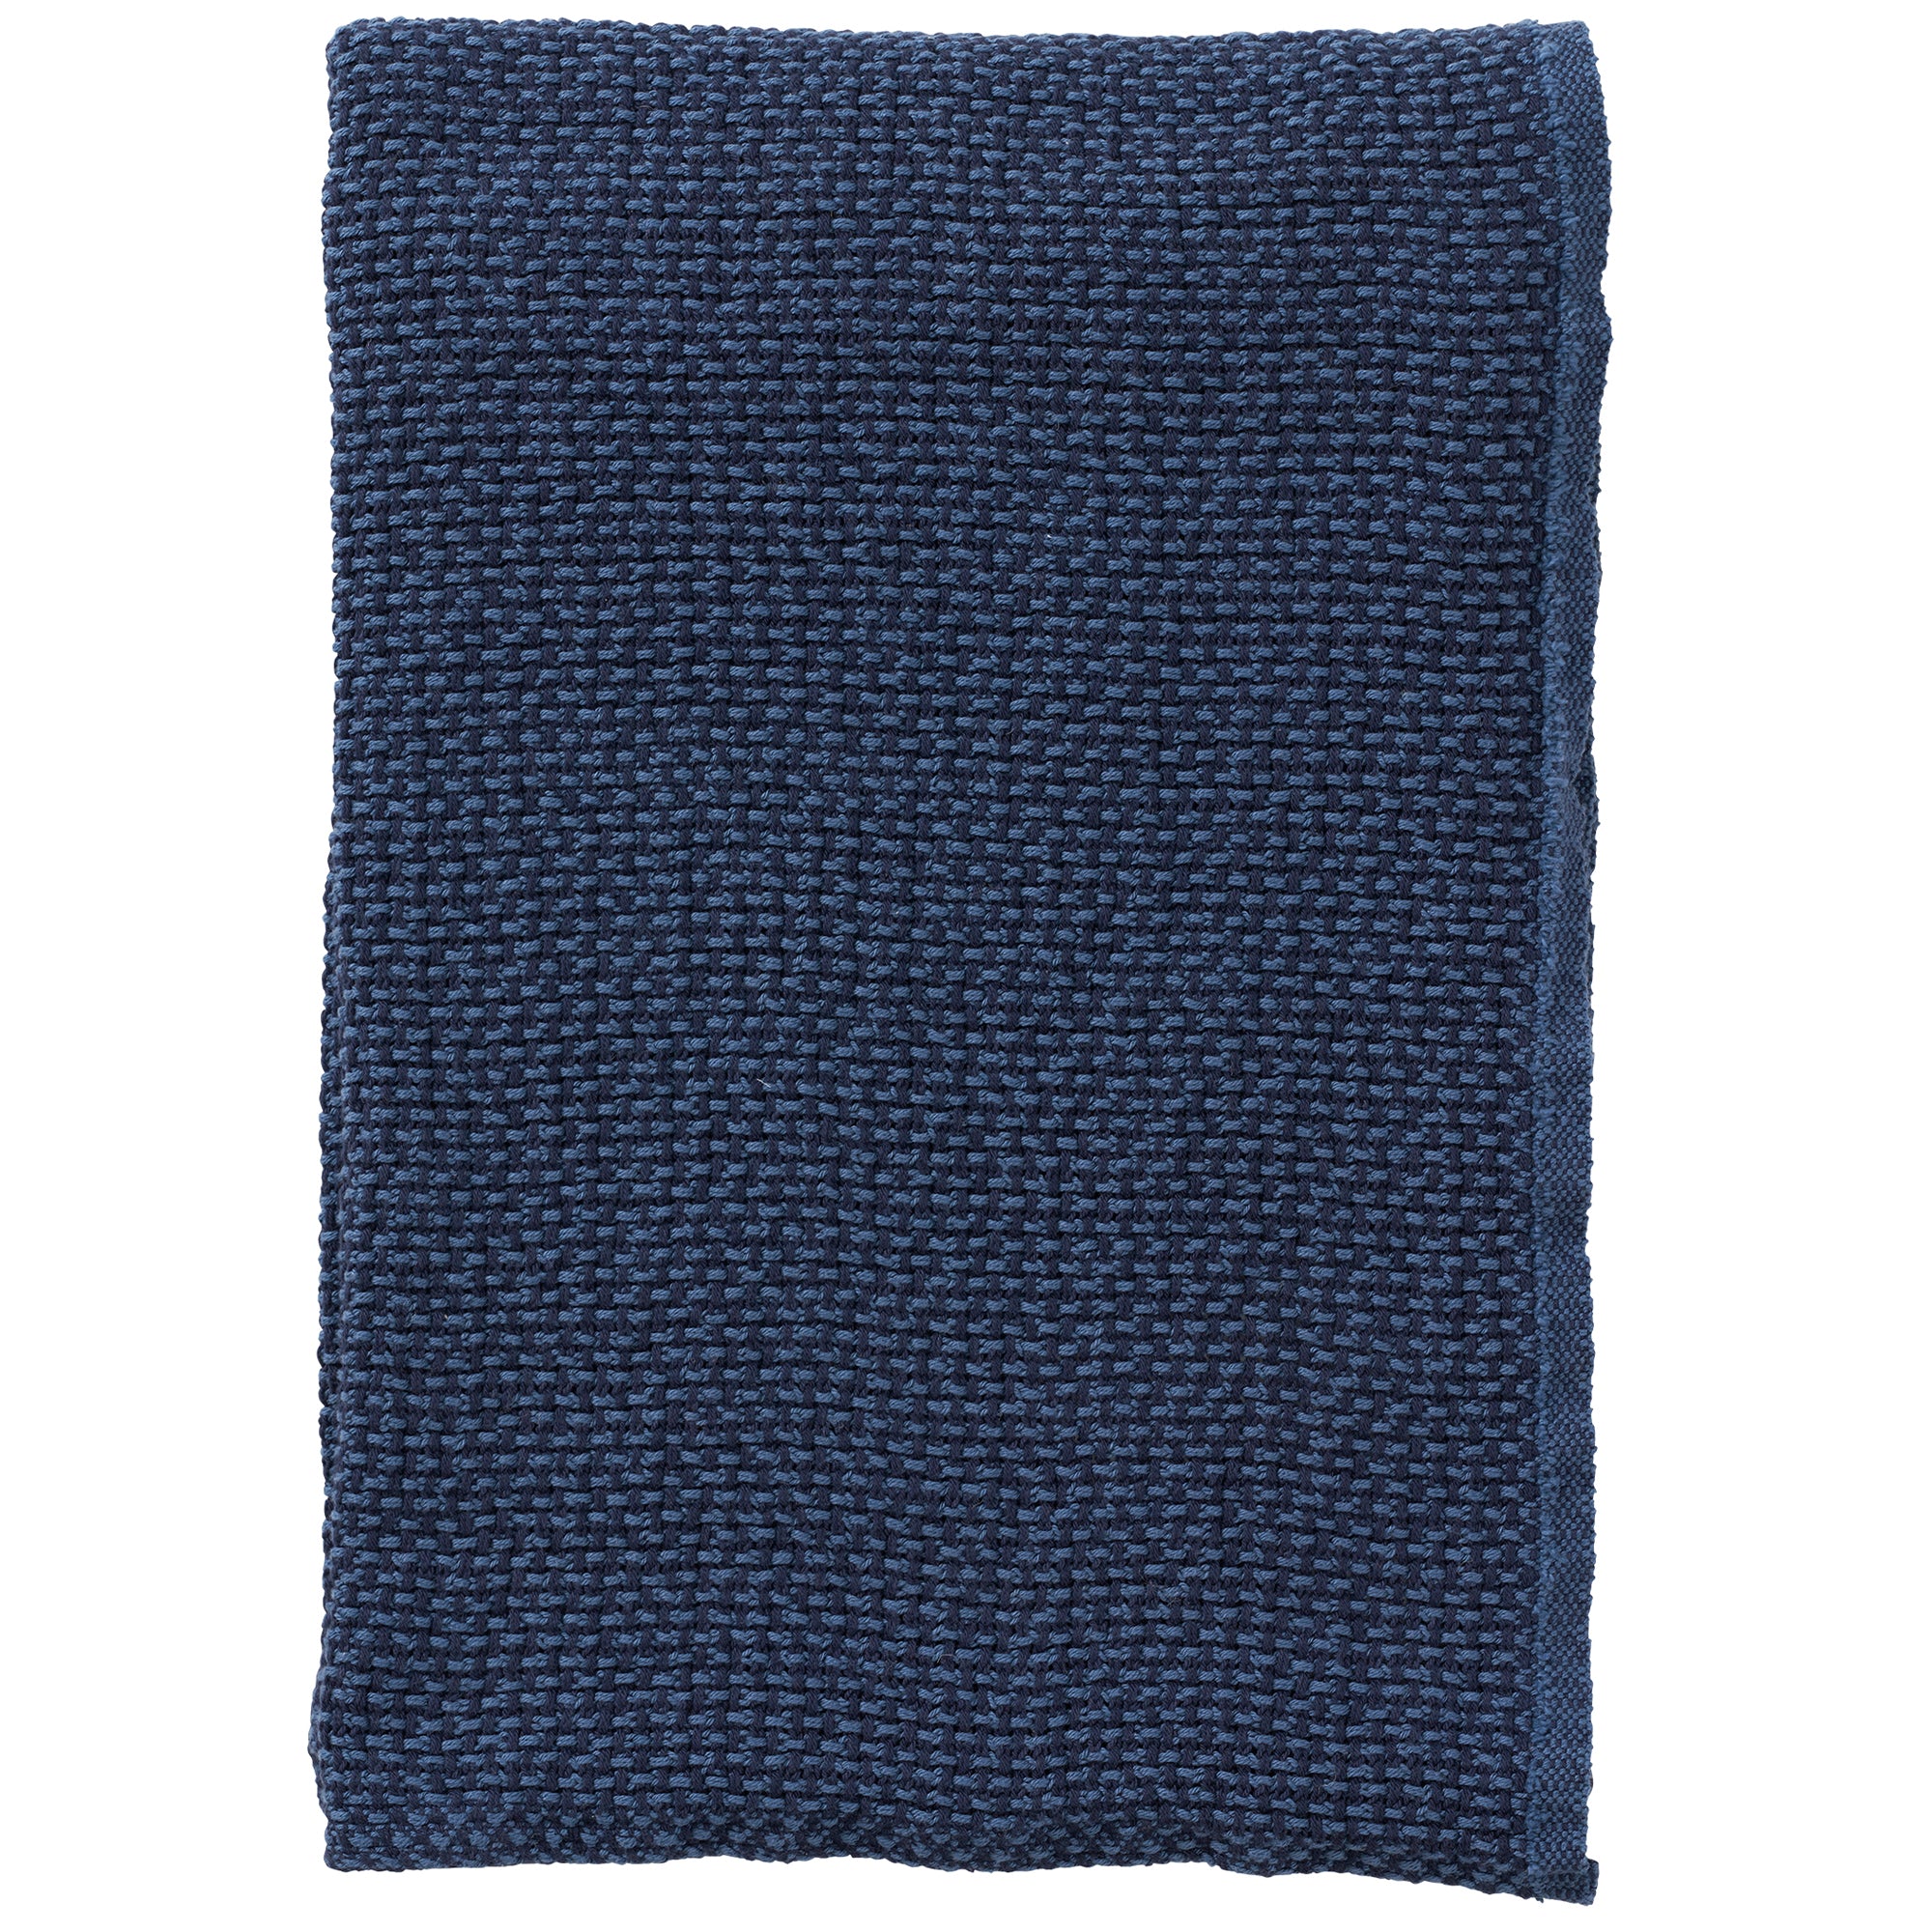 Basket Sea Blue 130x180cm Organic Cotton Blanket